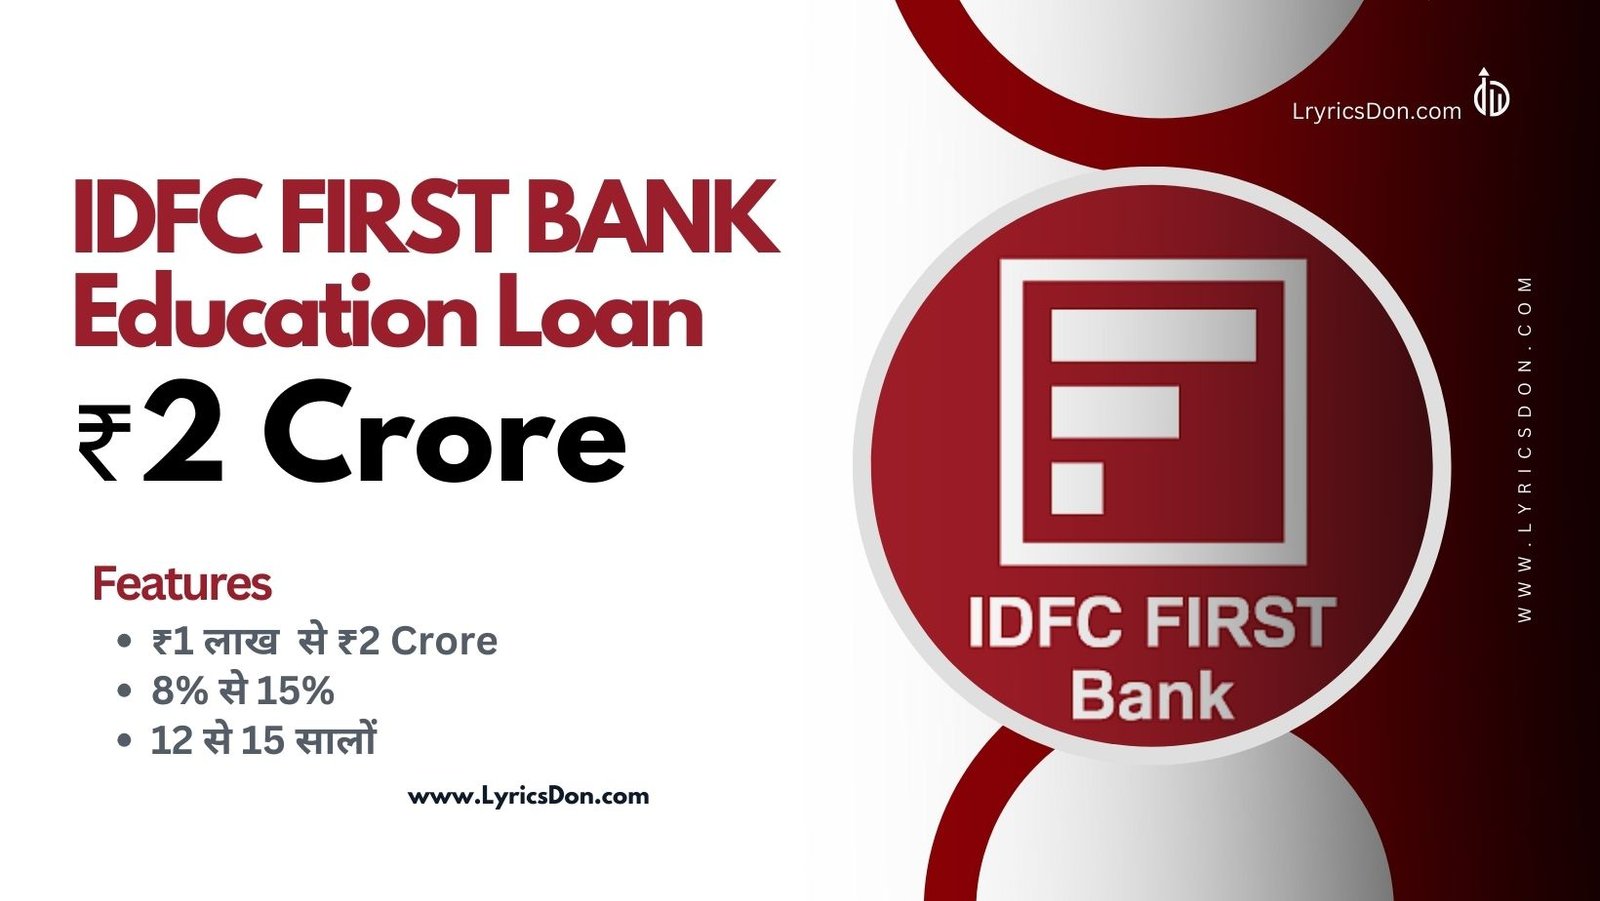 IDFC First Bank Education Loan Amount